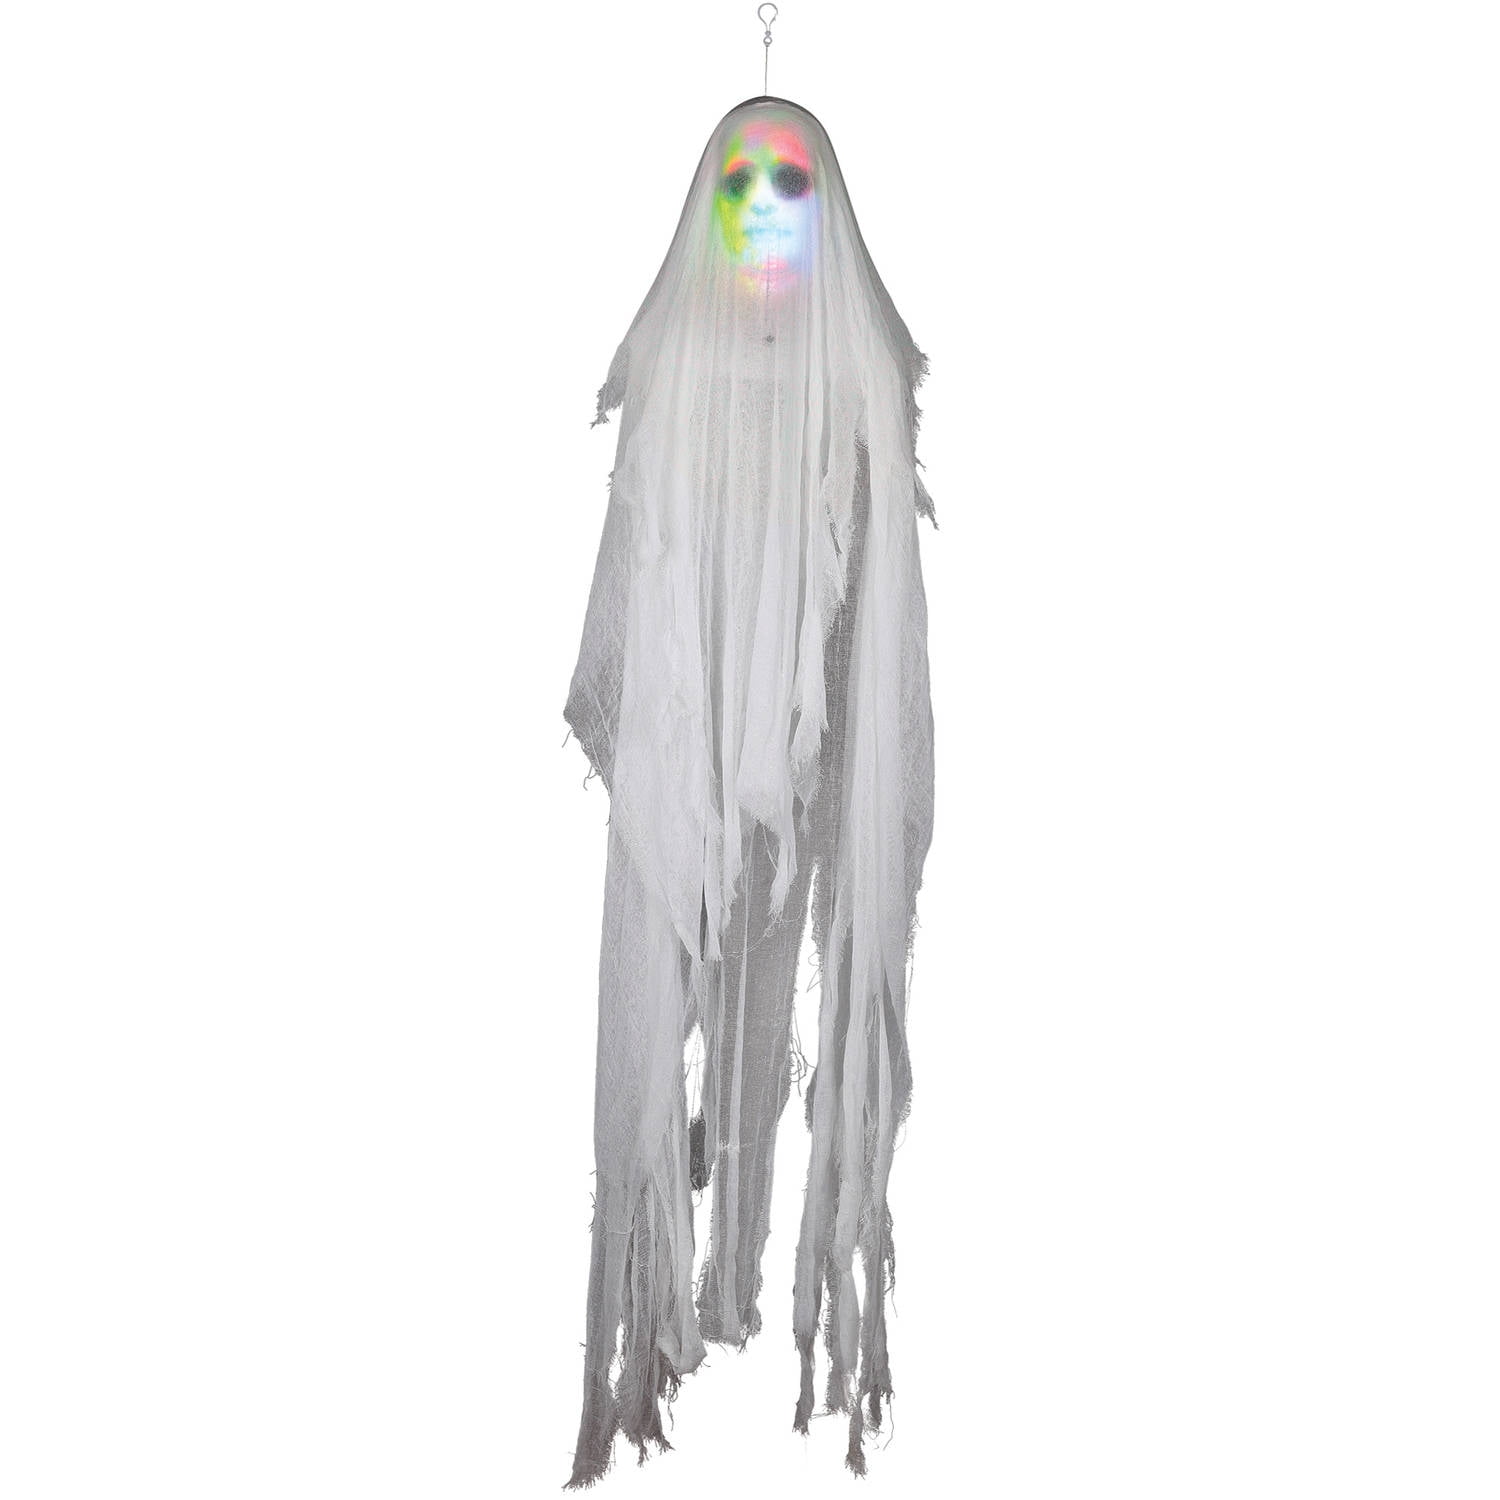 Lightshow Hanging Phantom Ghost Halloween Decoration - Walmart.com